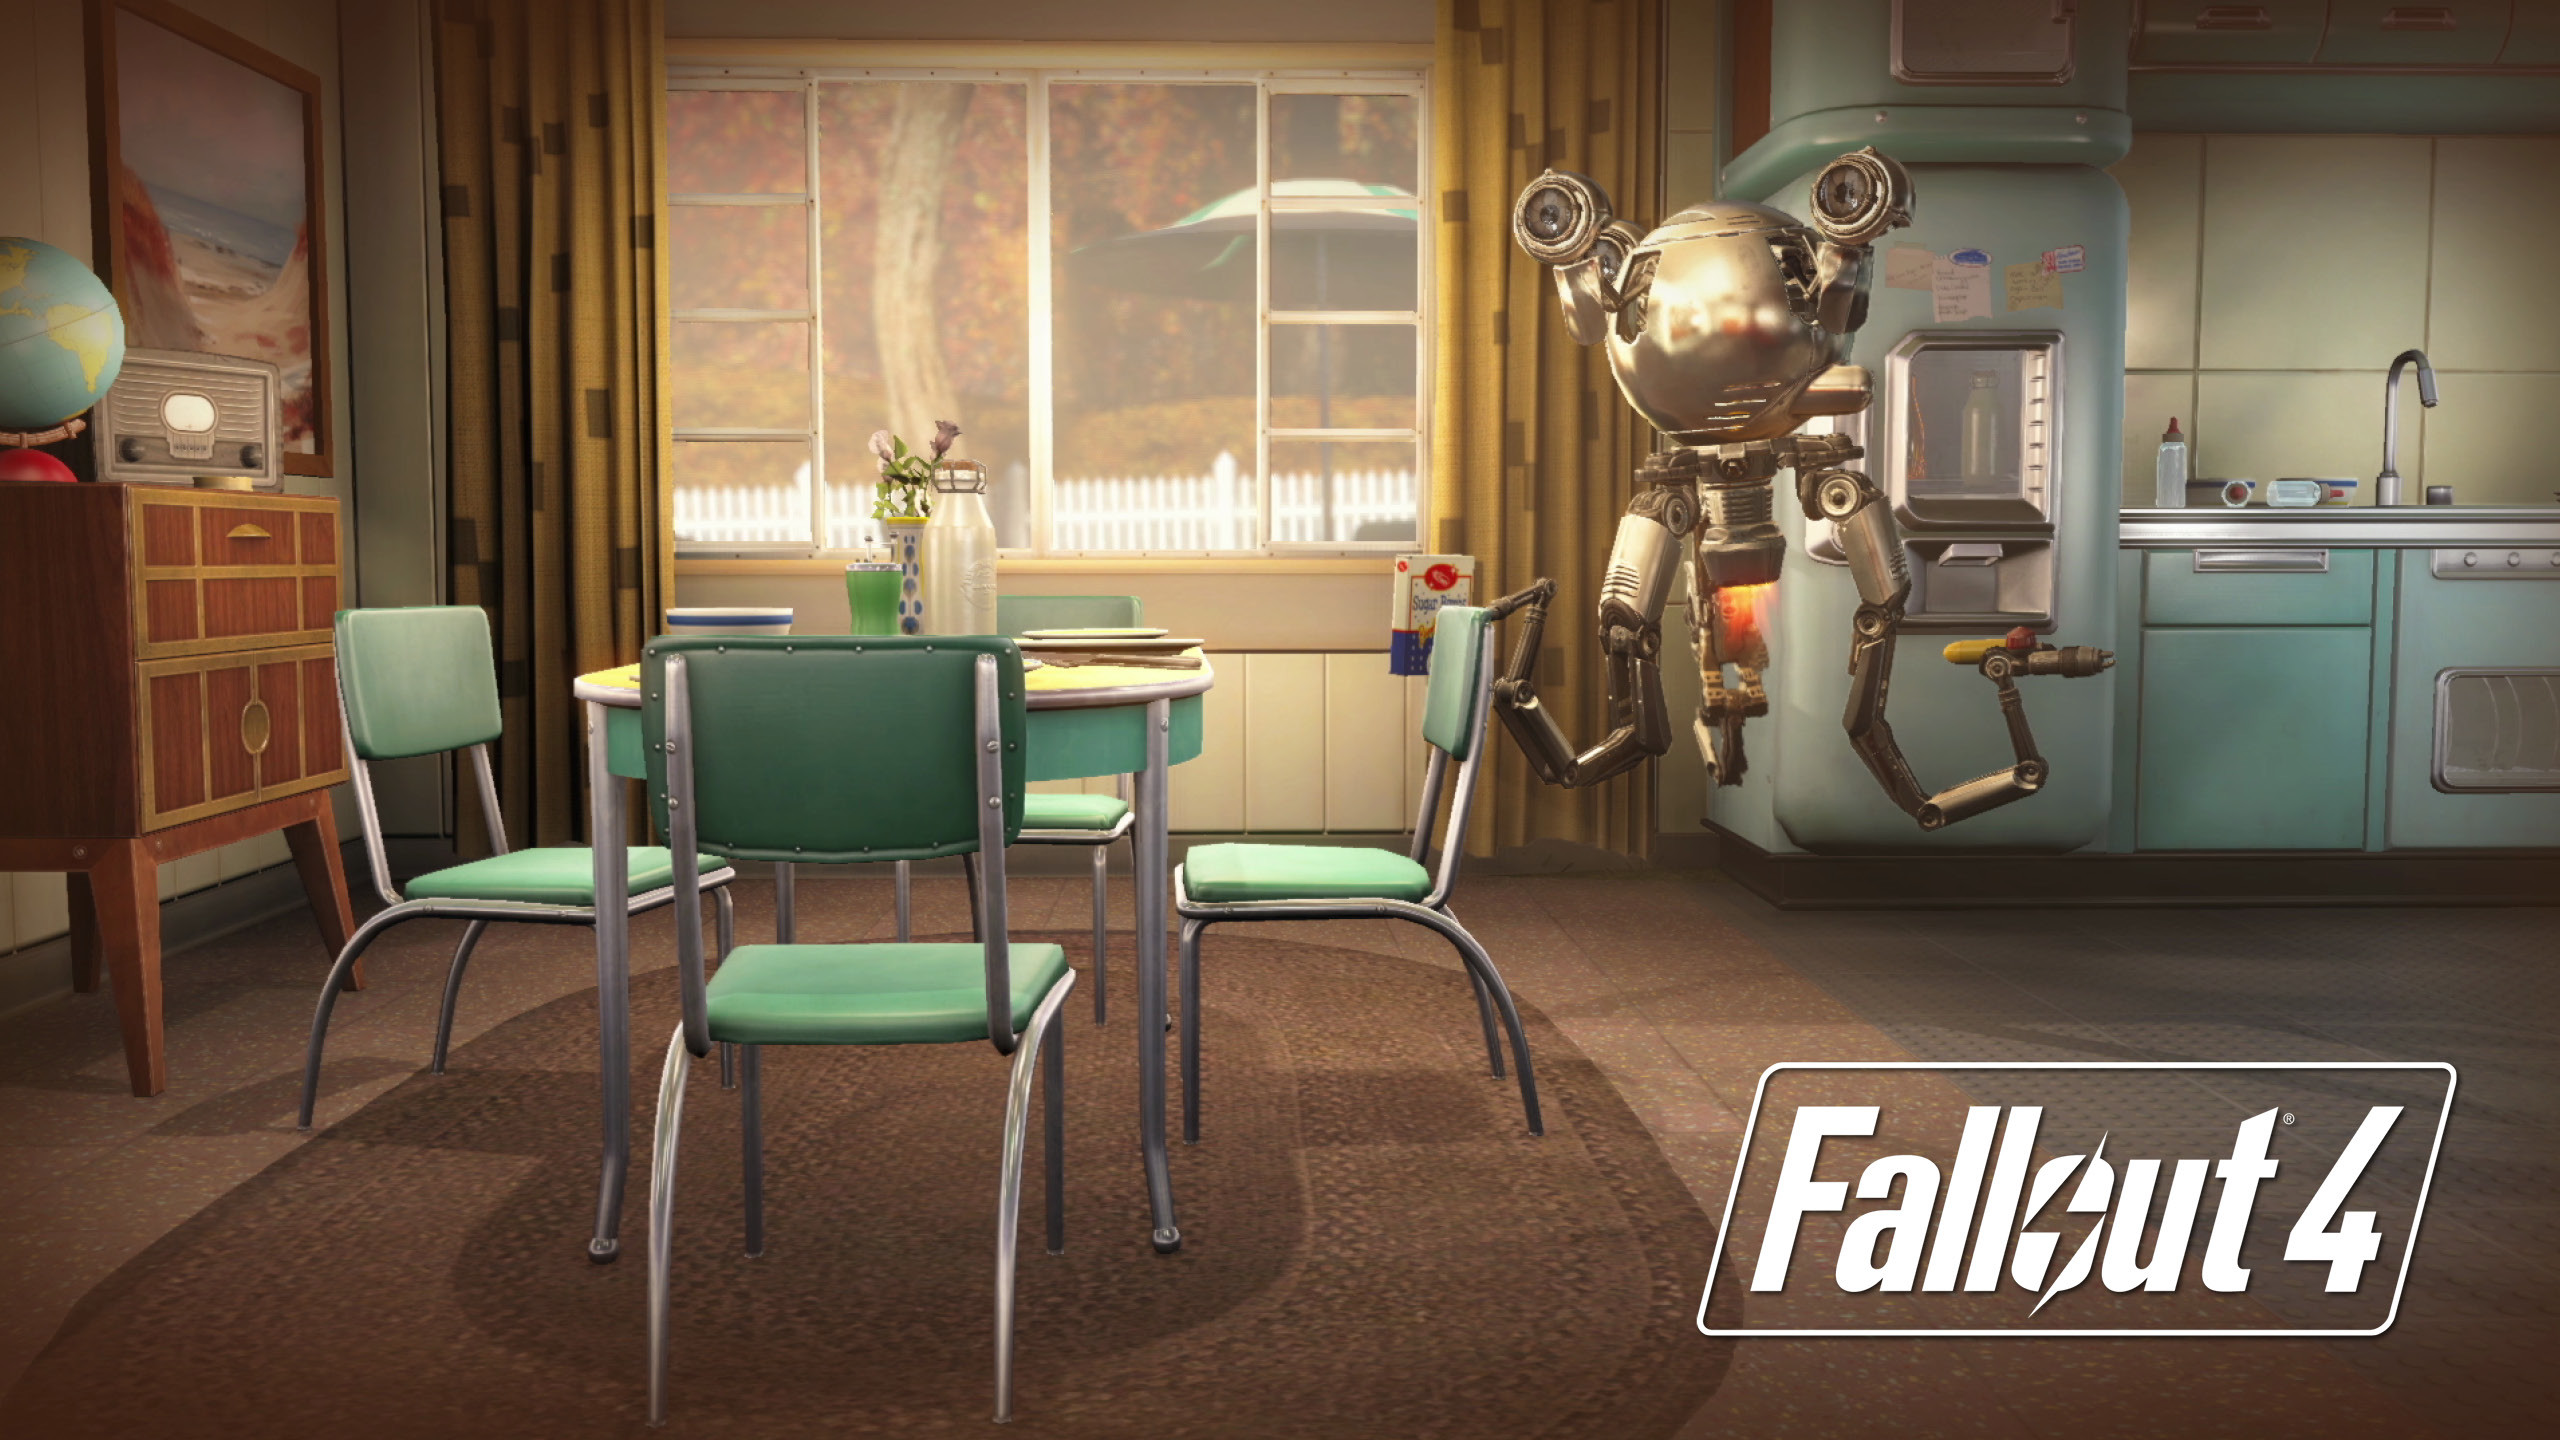 2560x1440 Fallout 4 HD Wallpaper Dump